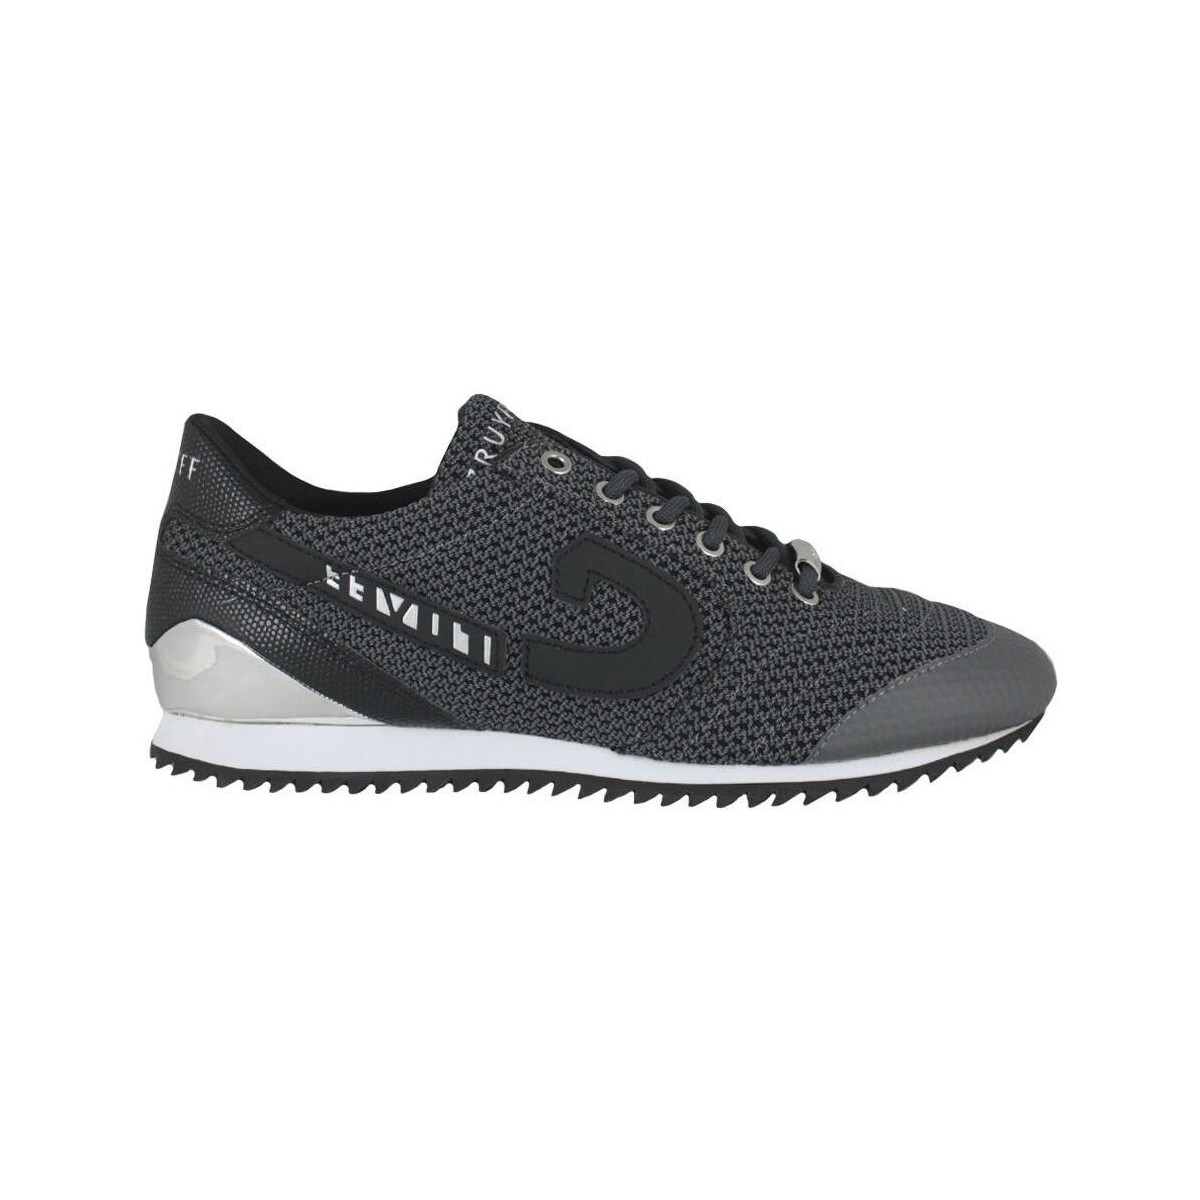 Pantofi Femei Sneakers Cruyff Revolt CC7184193 481 Dark Grey Gri